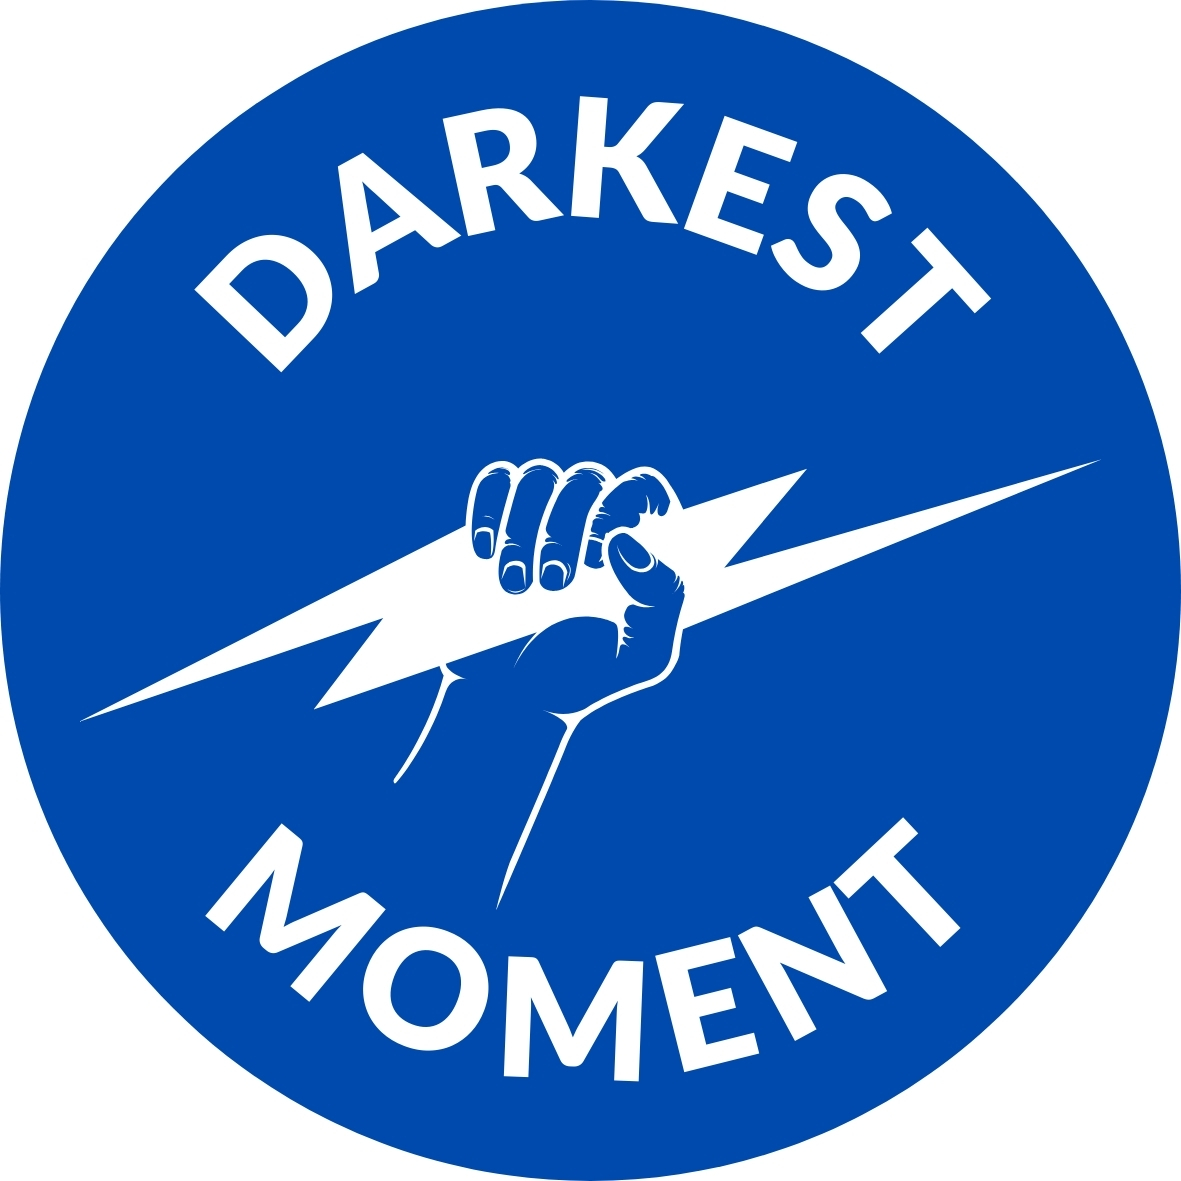 Darkest Moment